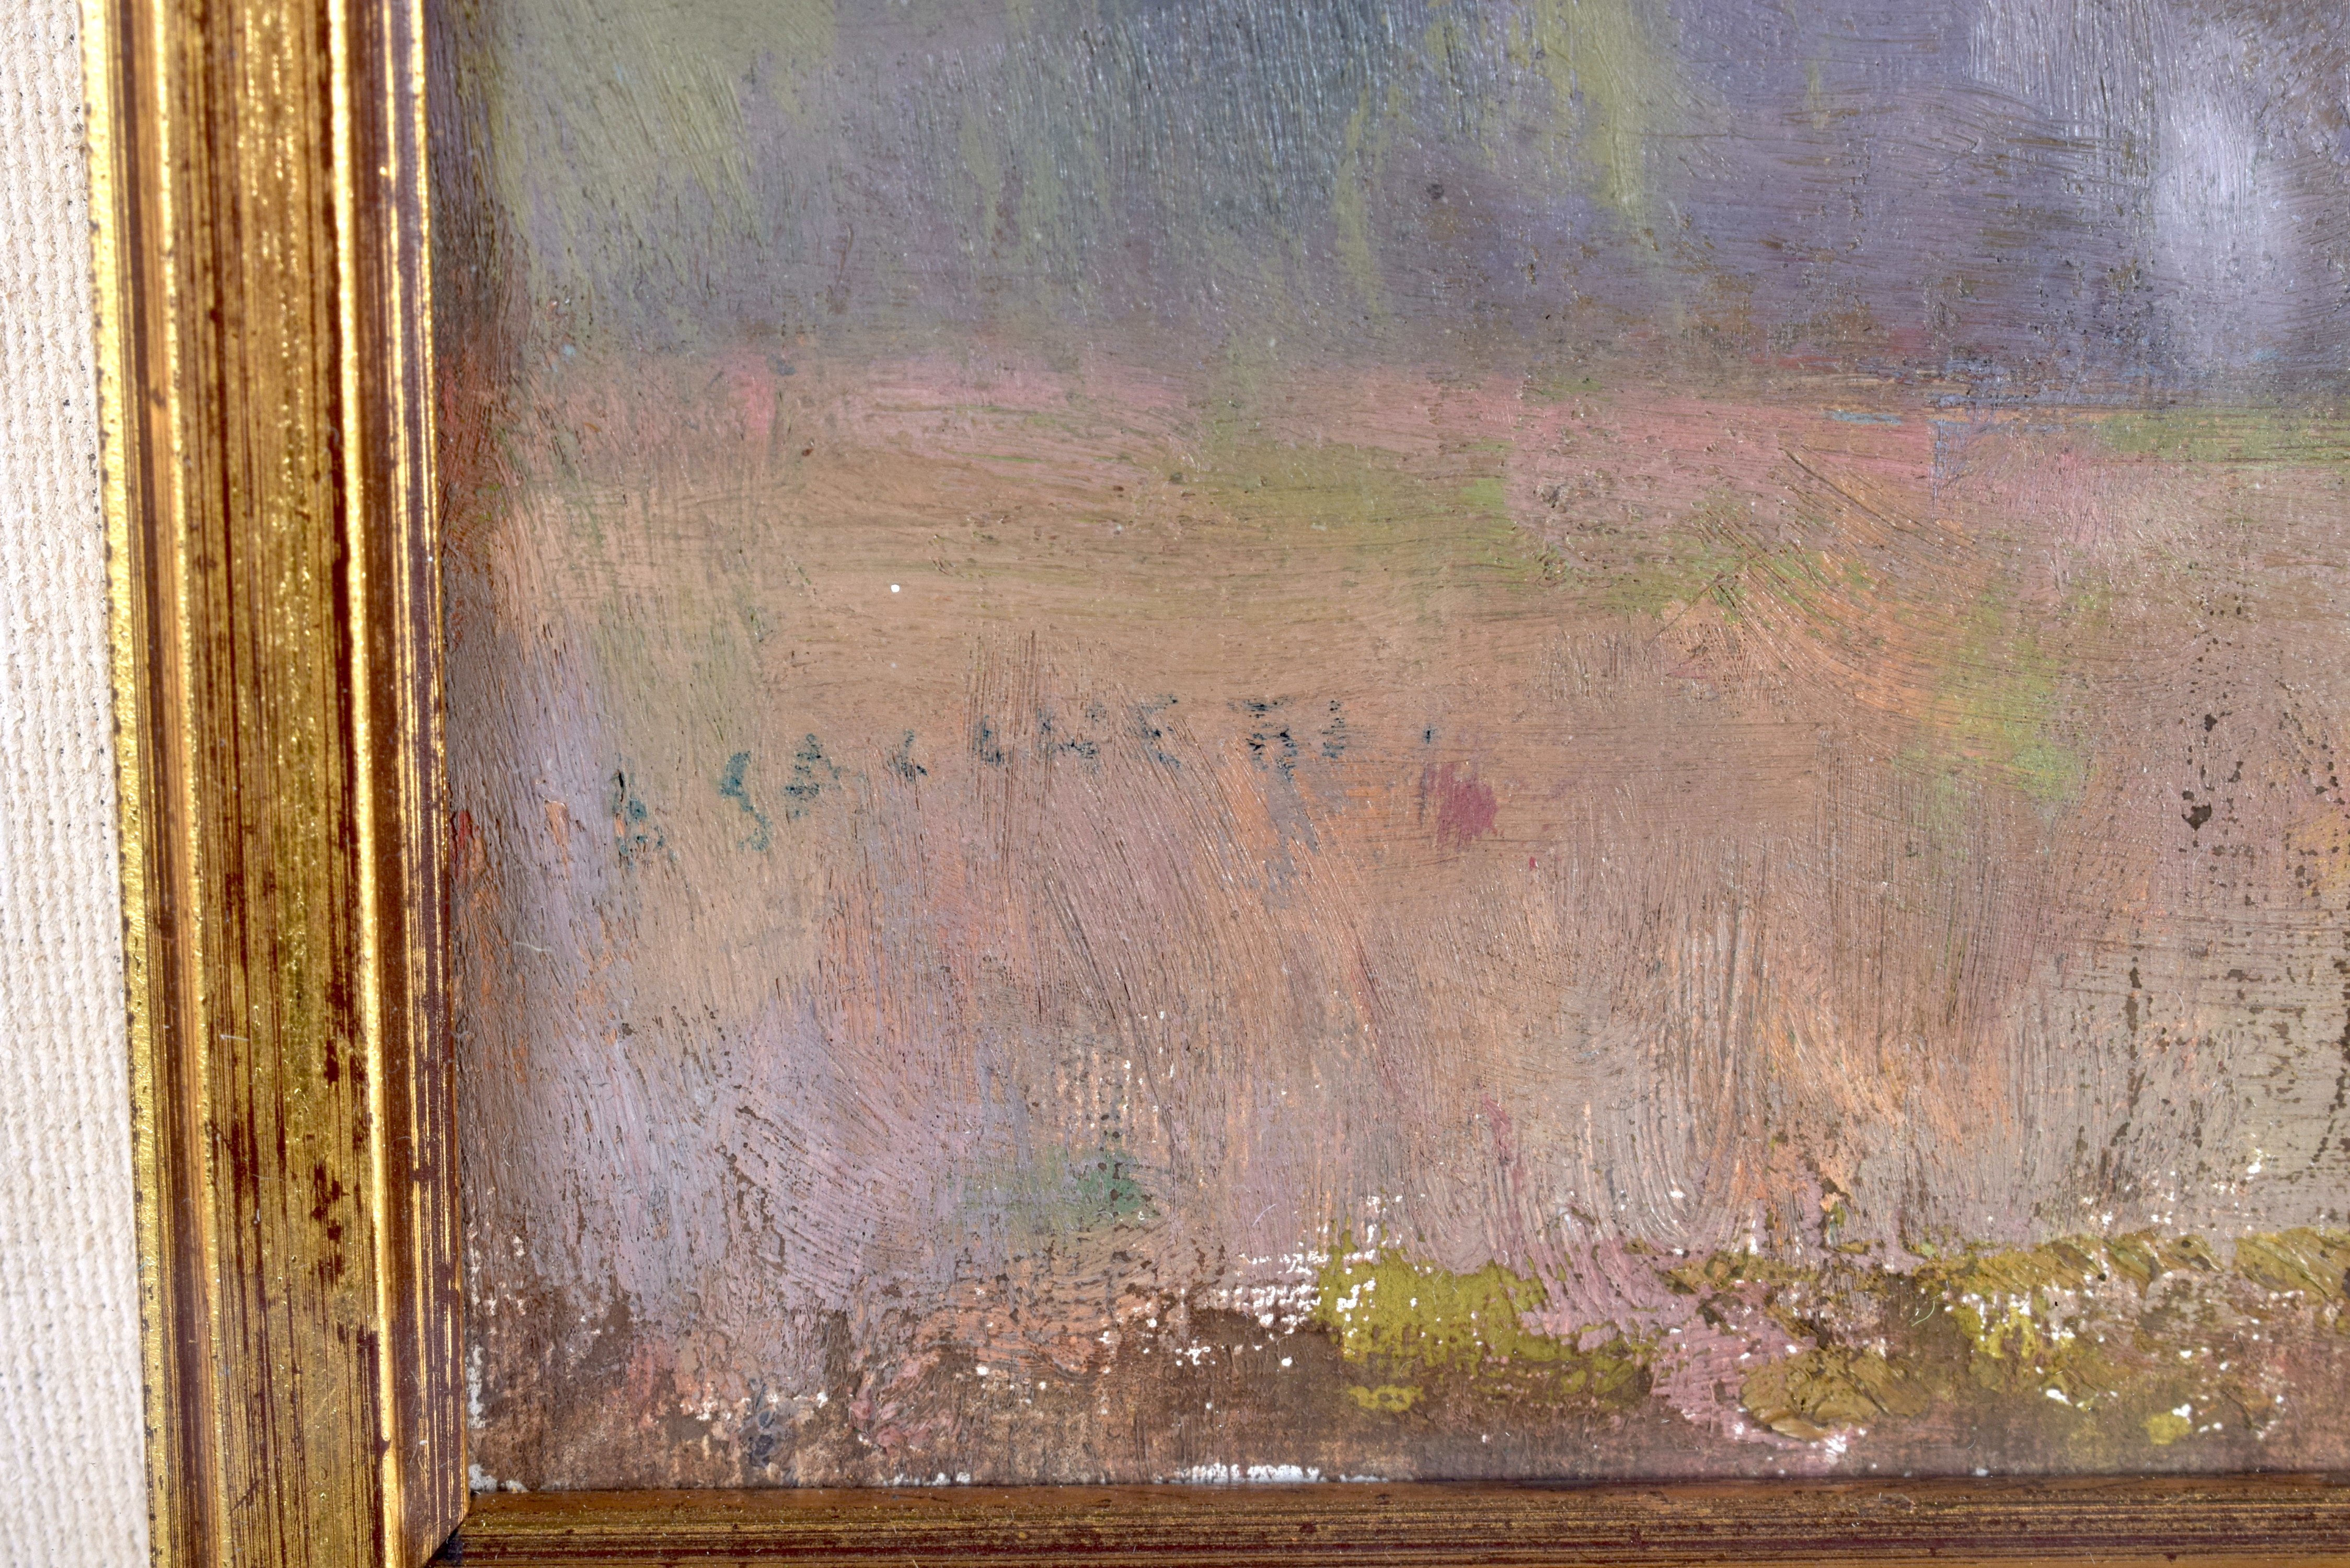 European School (20th Century) Oil on canvas, Landscape, possibly Spanish. Image 64 cm x 34 cm. - Bild 2 aus 4